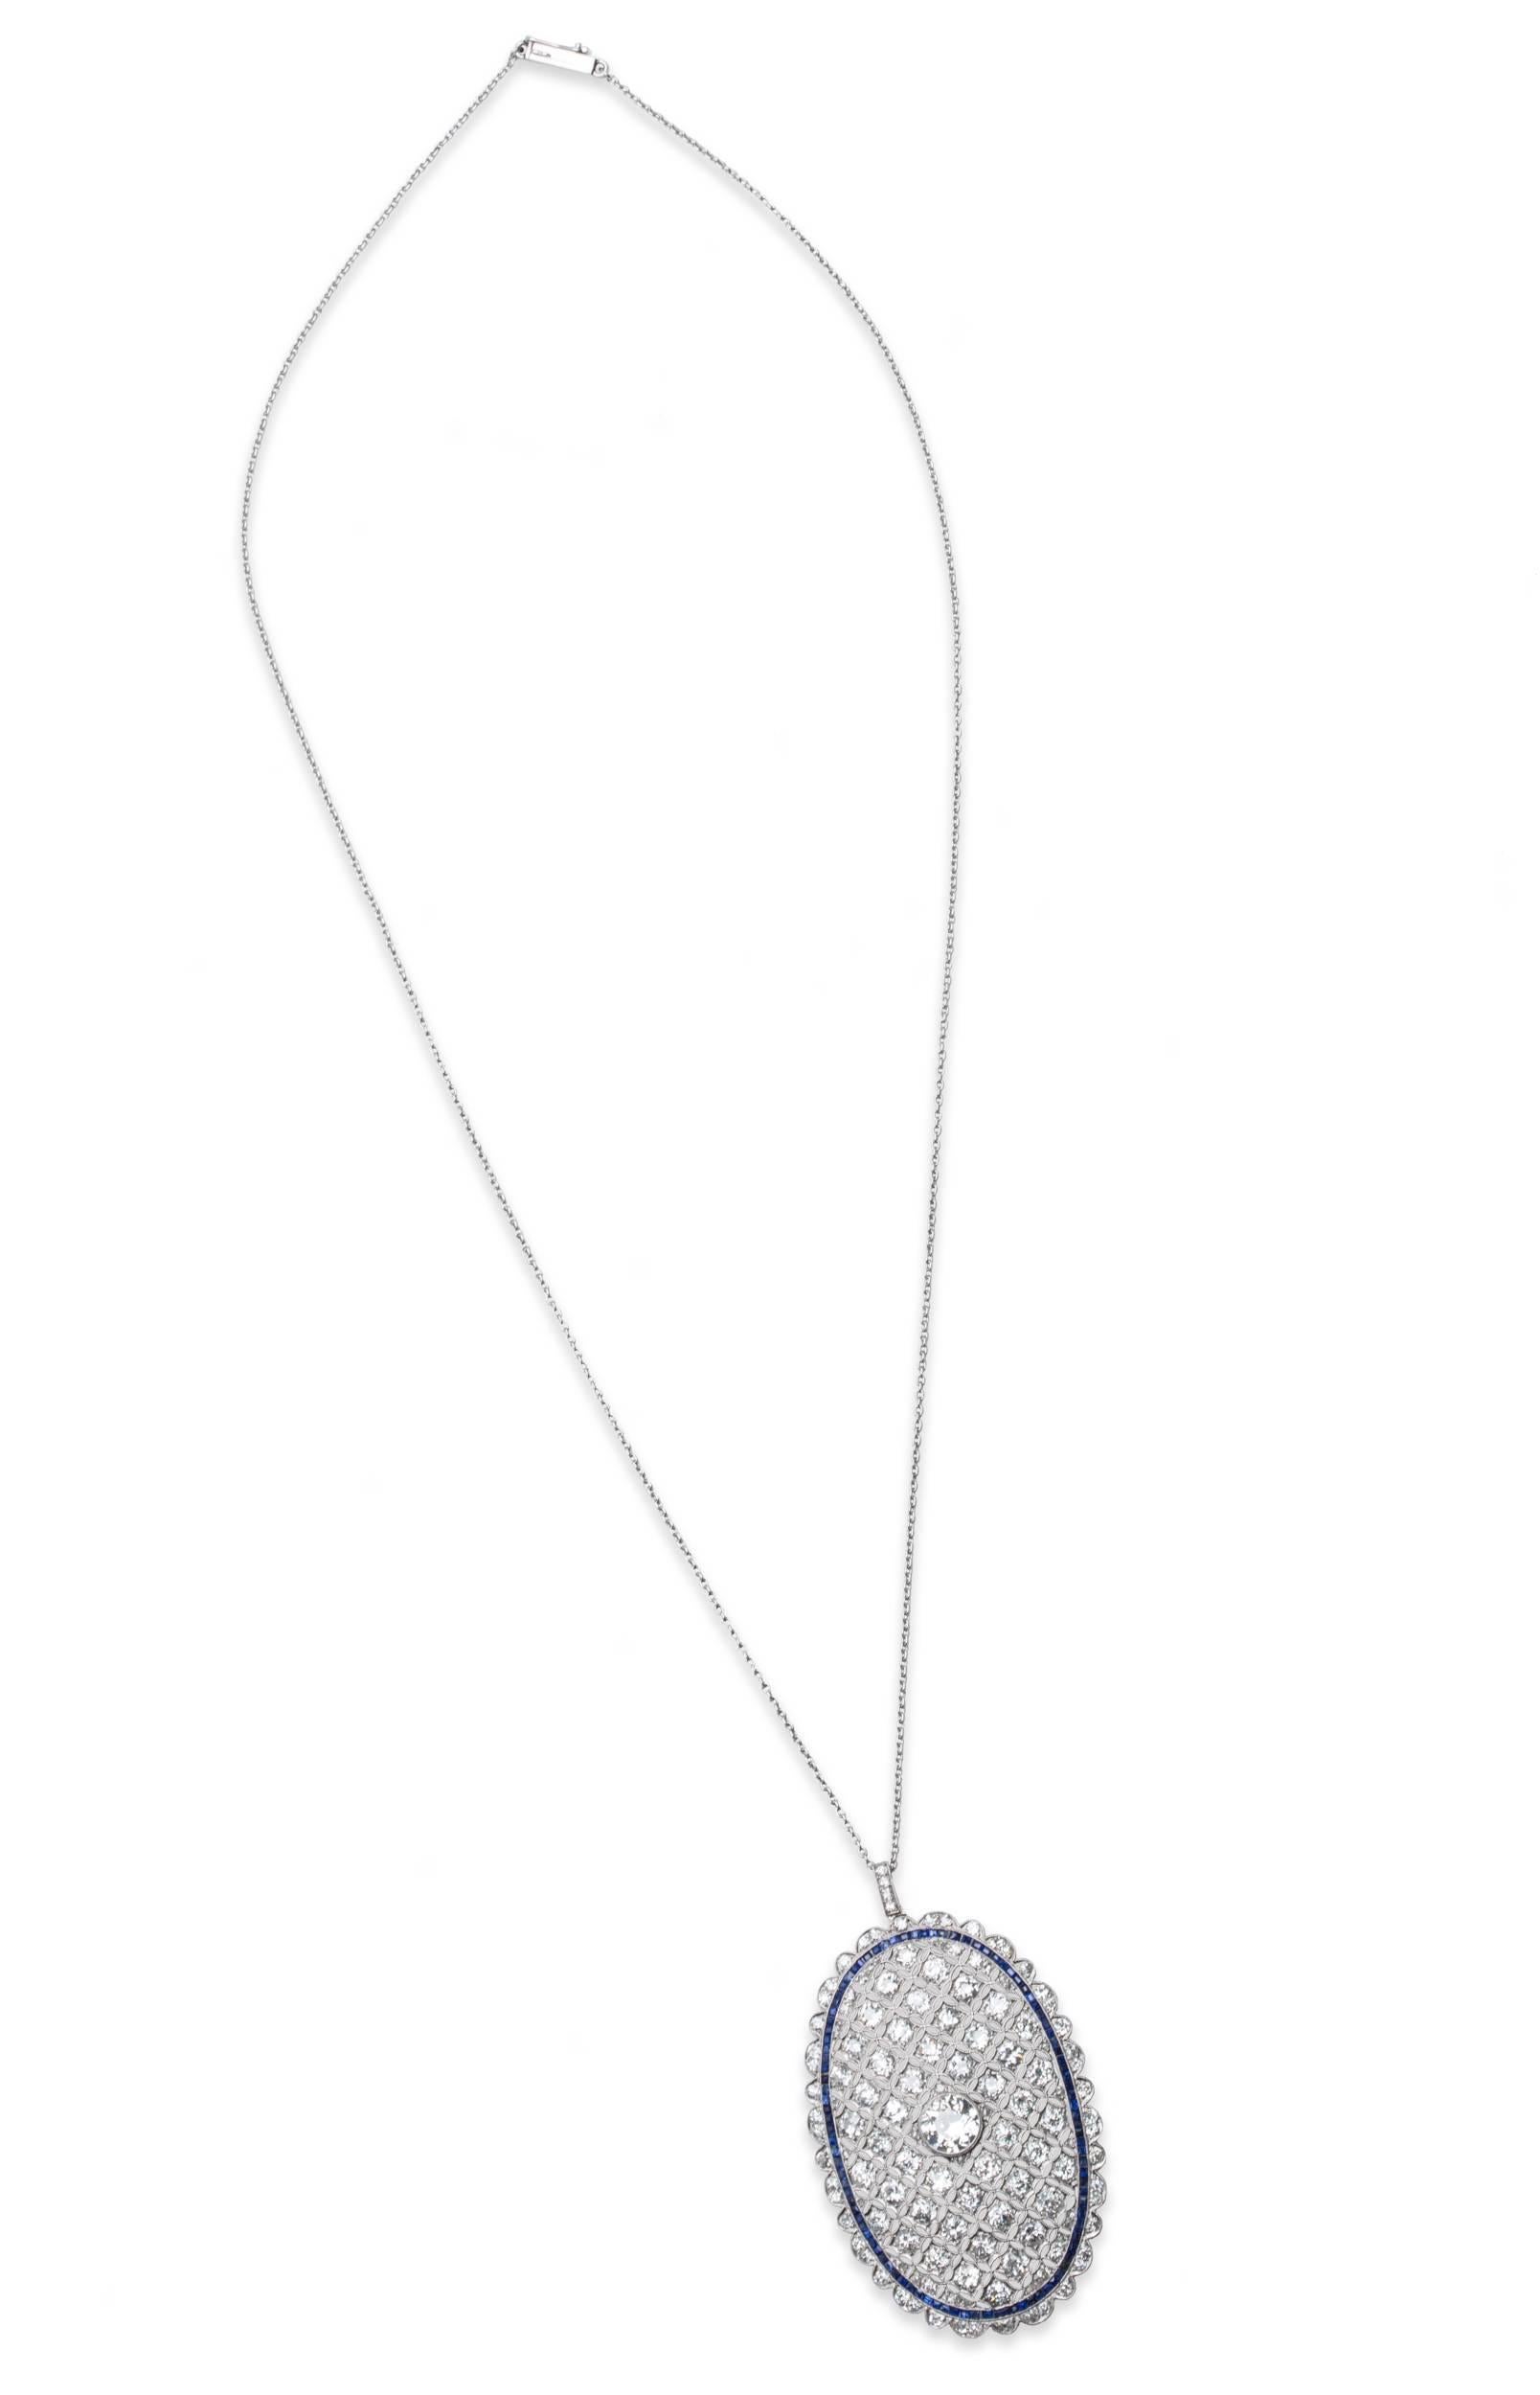 Diamond and Calibre-cut Sapphire Pendant Necklace in Platinum on Fine Link Chain, Pendant Dimensions: L 2.50